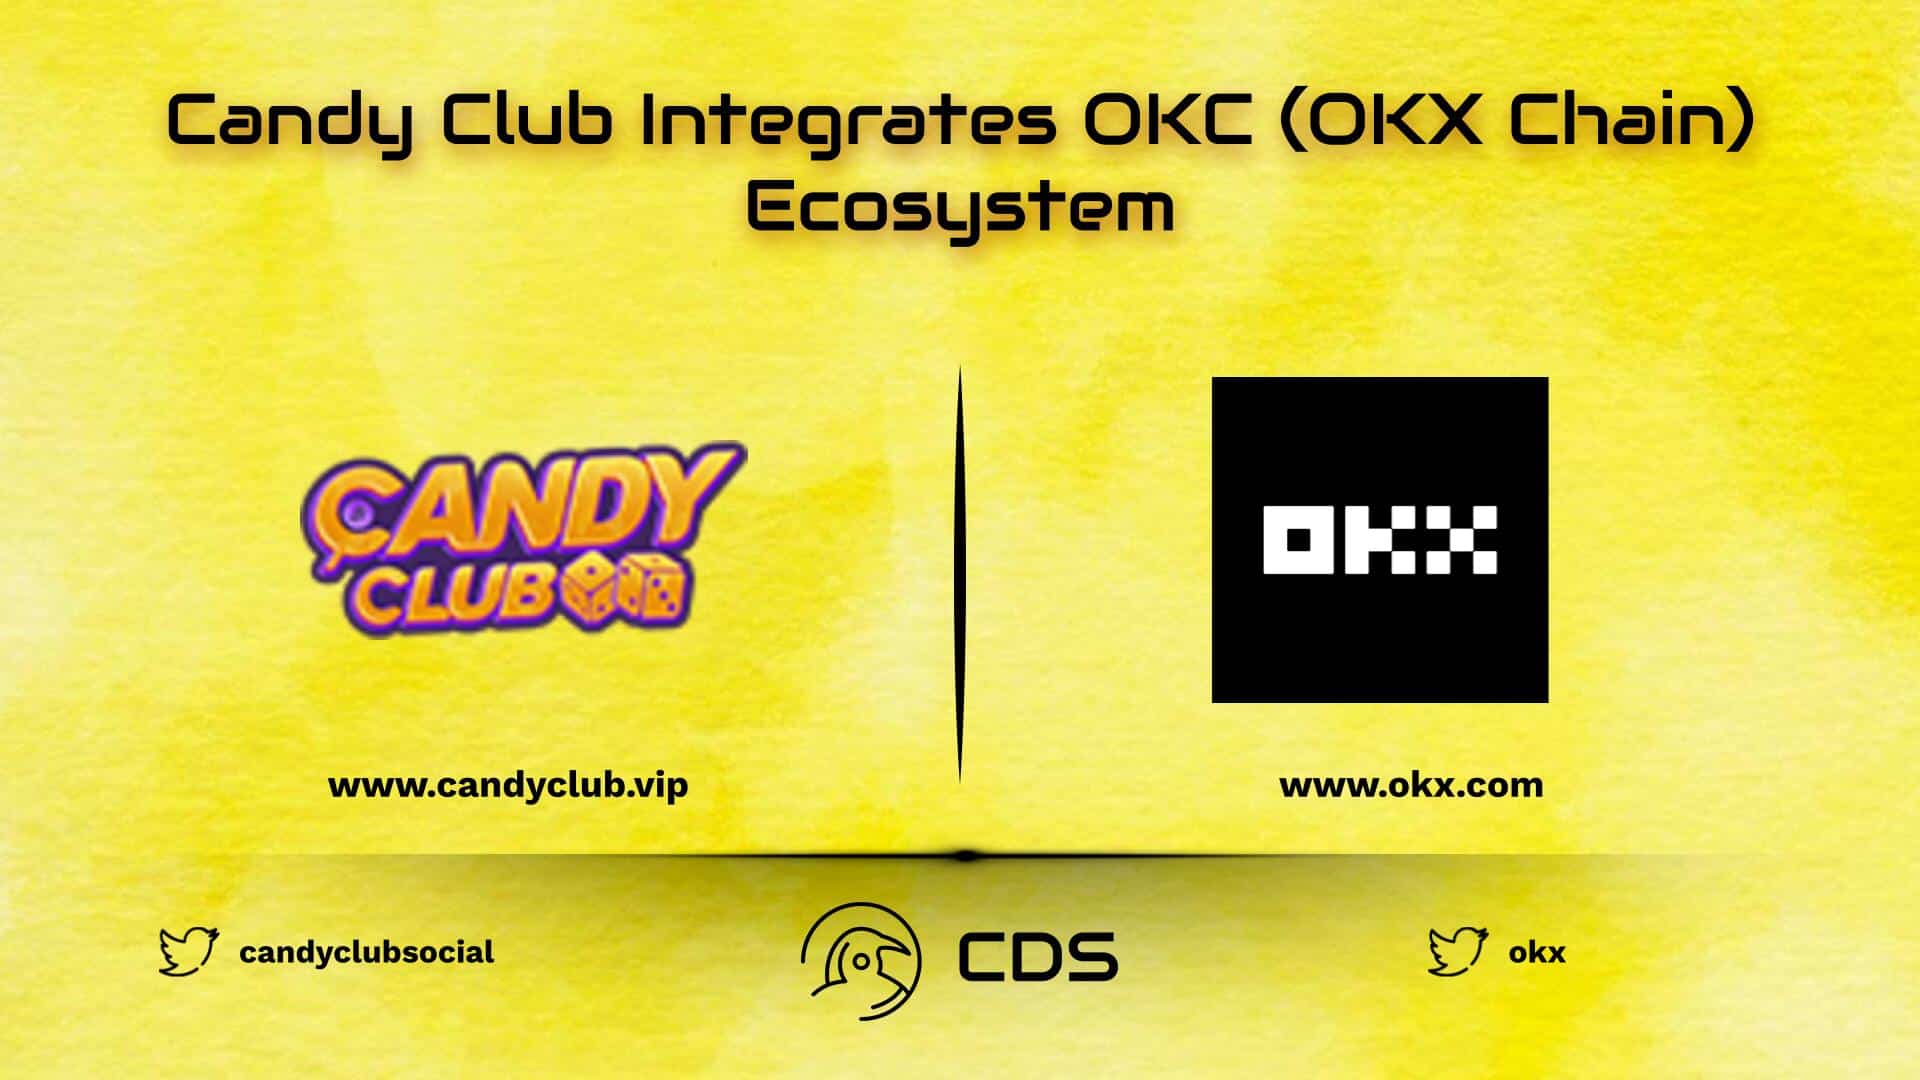 Candy Club Integrates with OKC (OKX Chain) Ecosystem